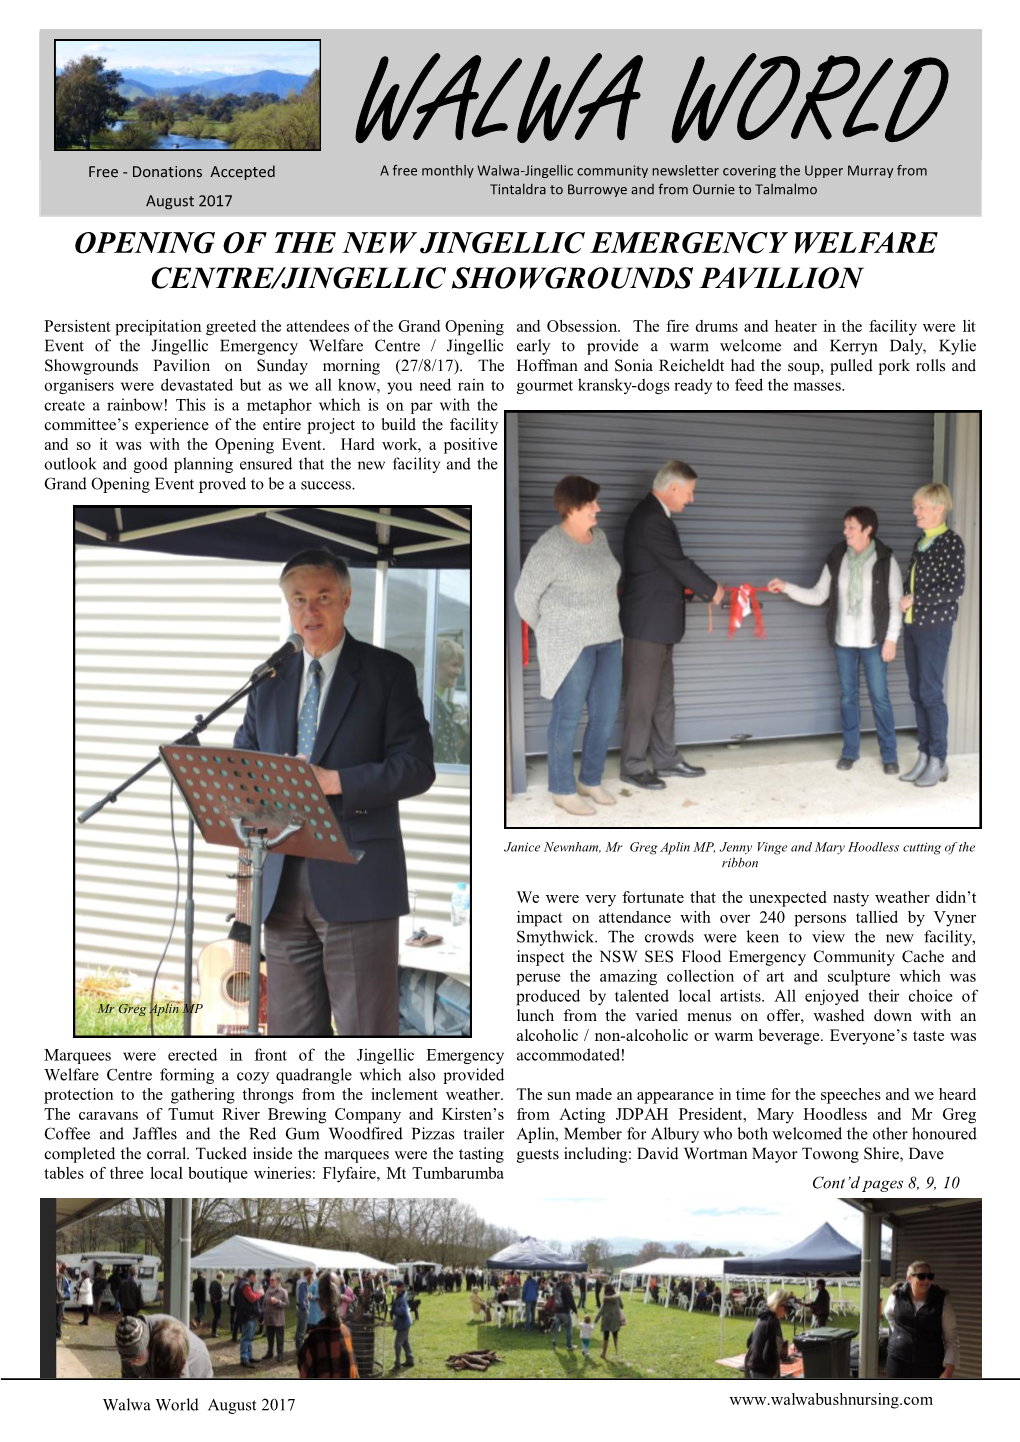 Opening of the New Jingellic Emergency Welfare Centre/Jingellic Showgrounds Pavillion